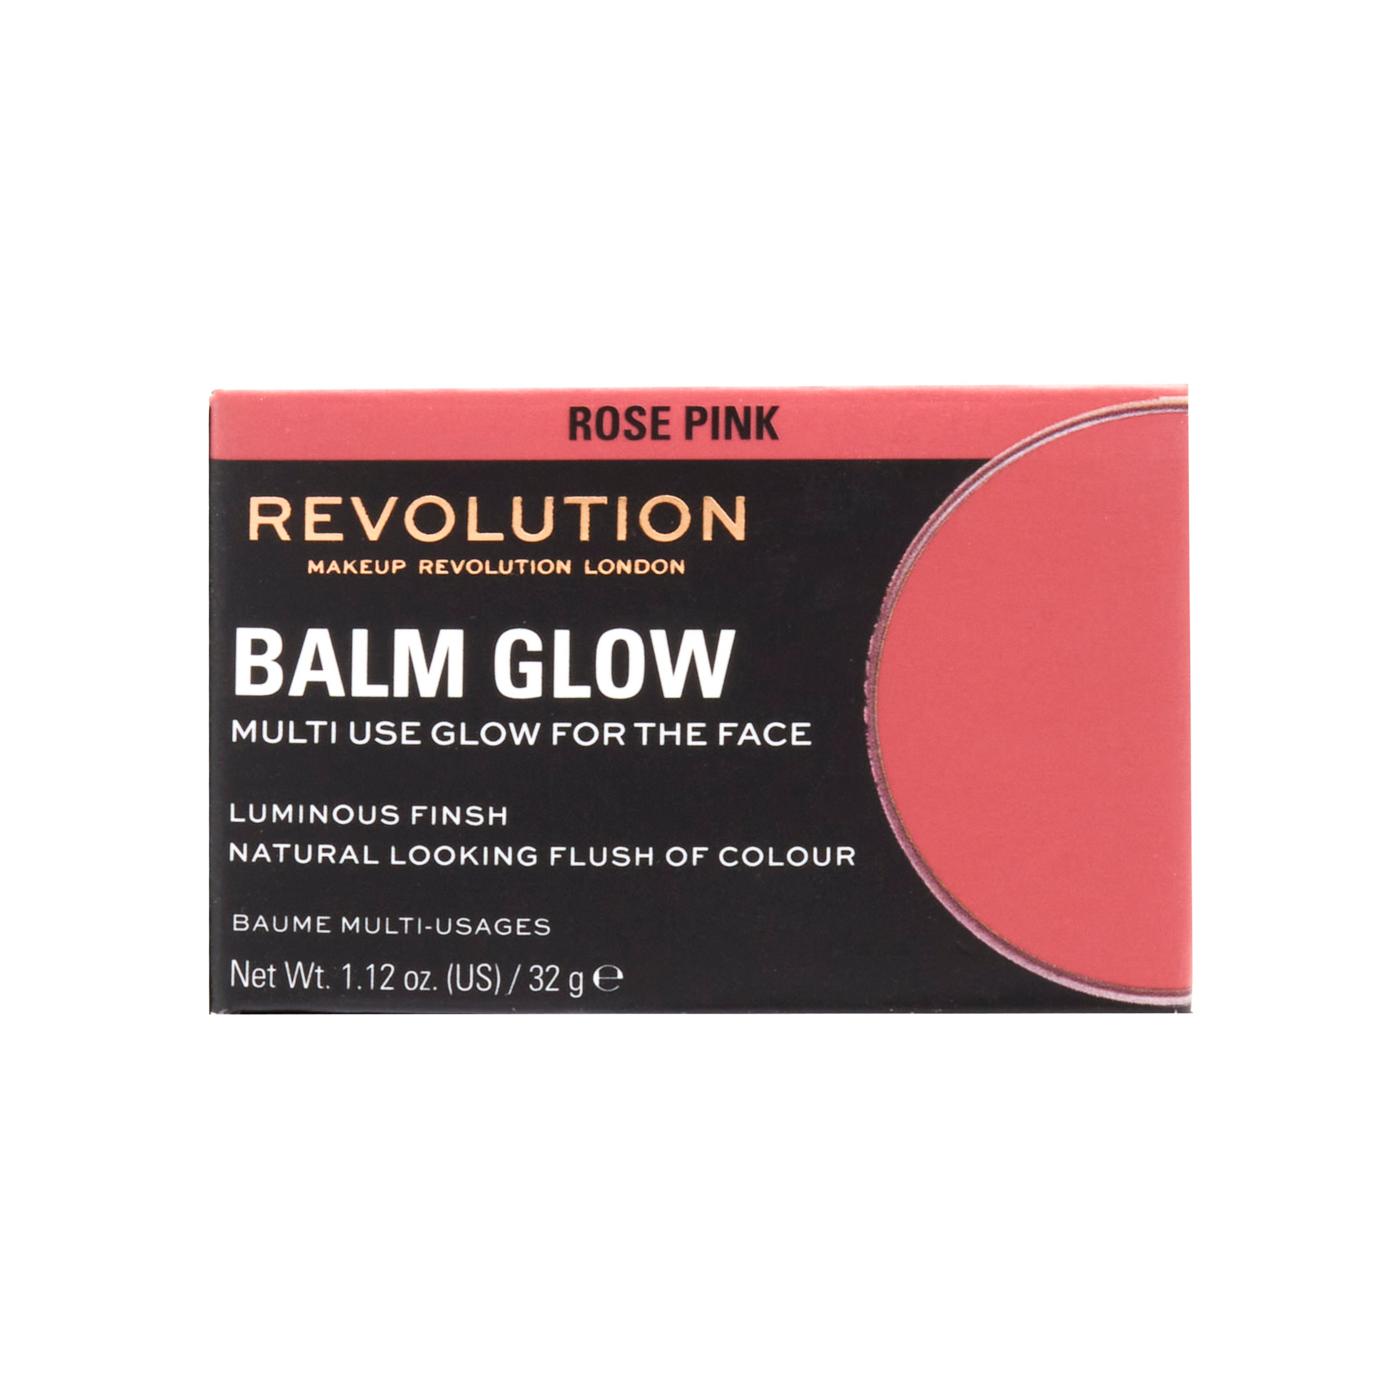 Makeup Revolution Balm Glow - Rose Pink; image 1 of 5